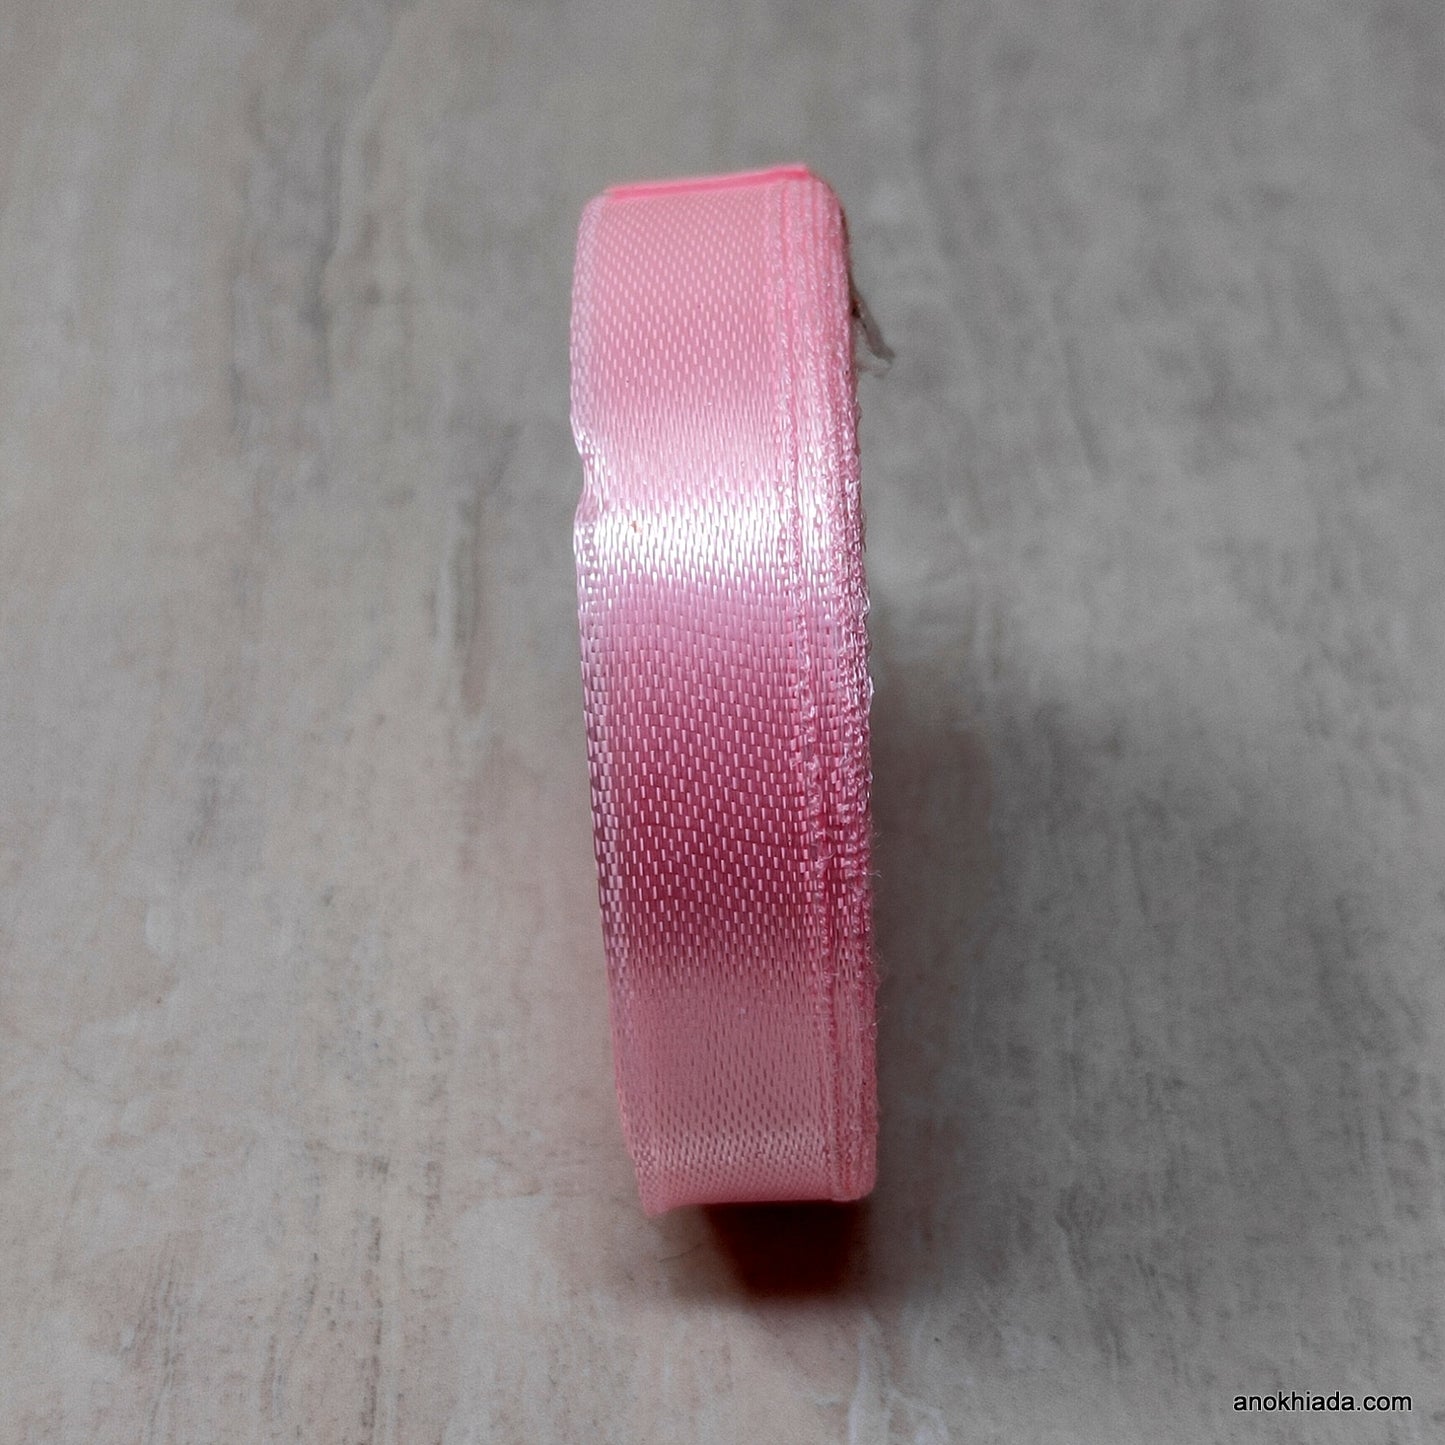 1/2 Inch (12.5 mm) Pink Satin Ribbon (035)